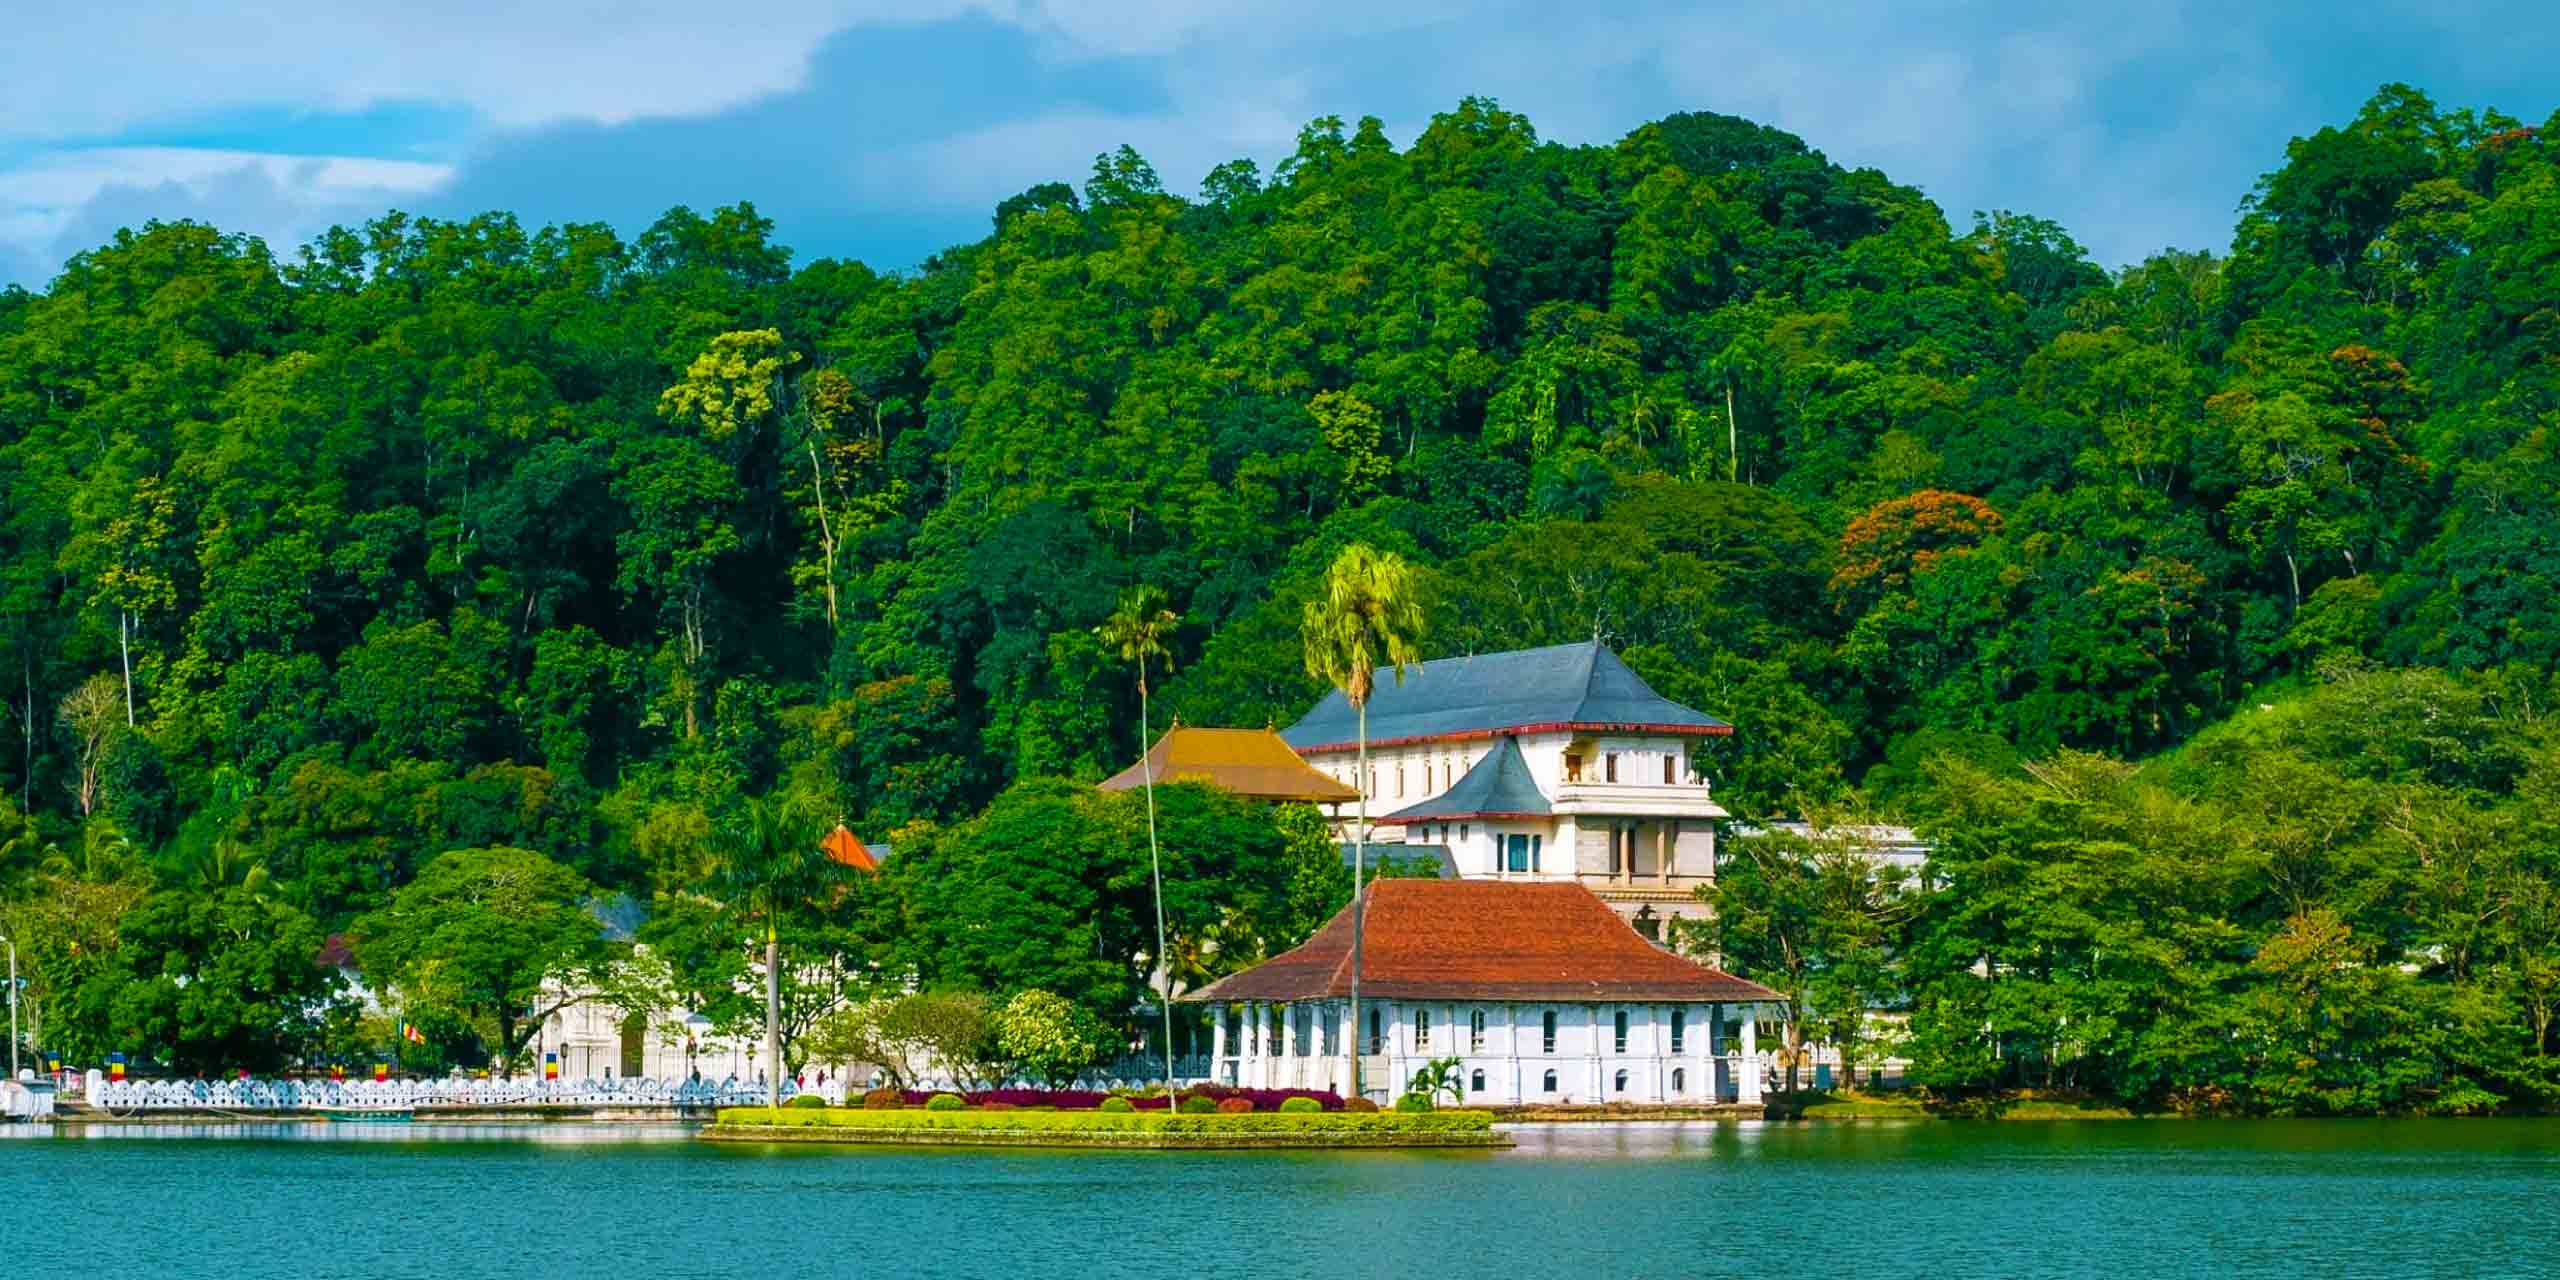 Srilanka_Kandy-Lake-2